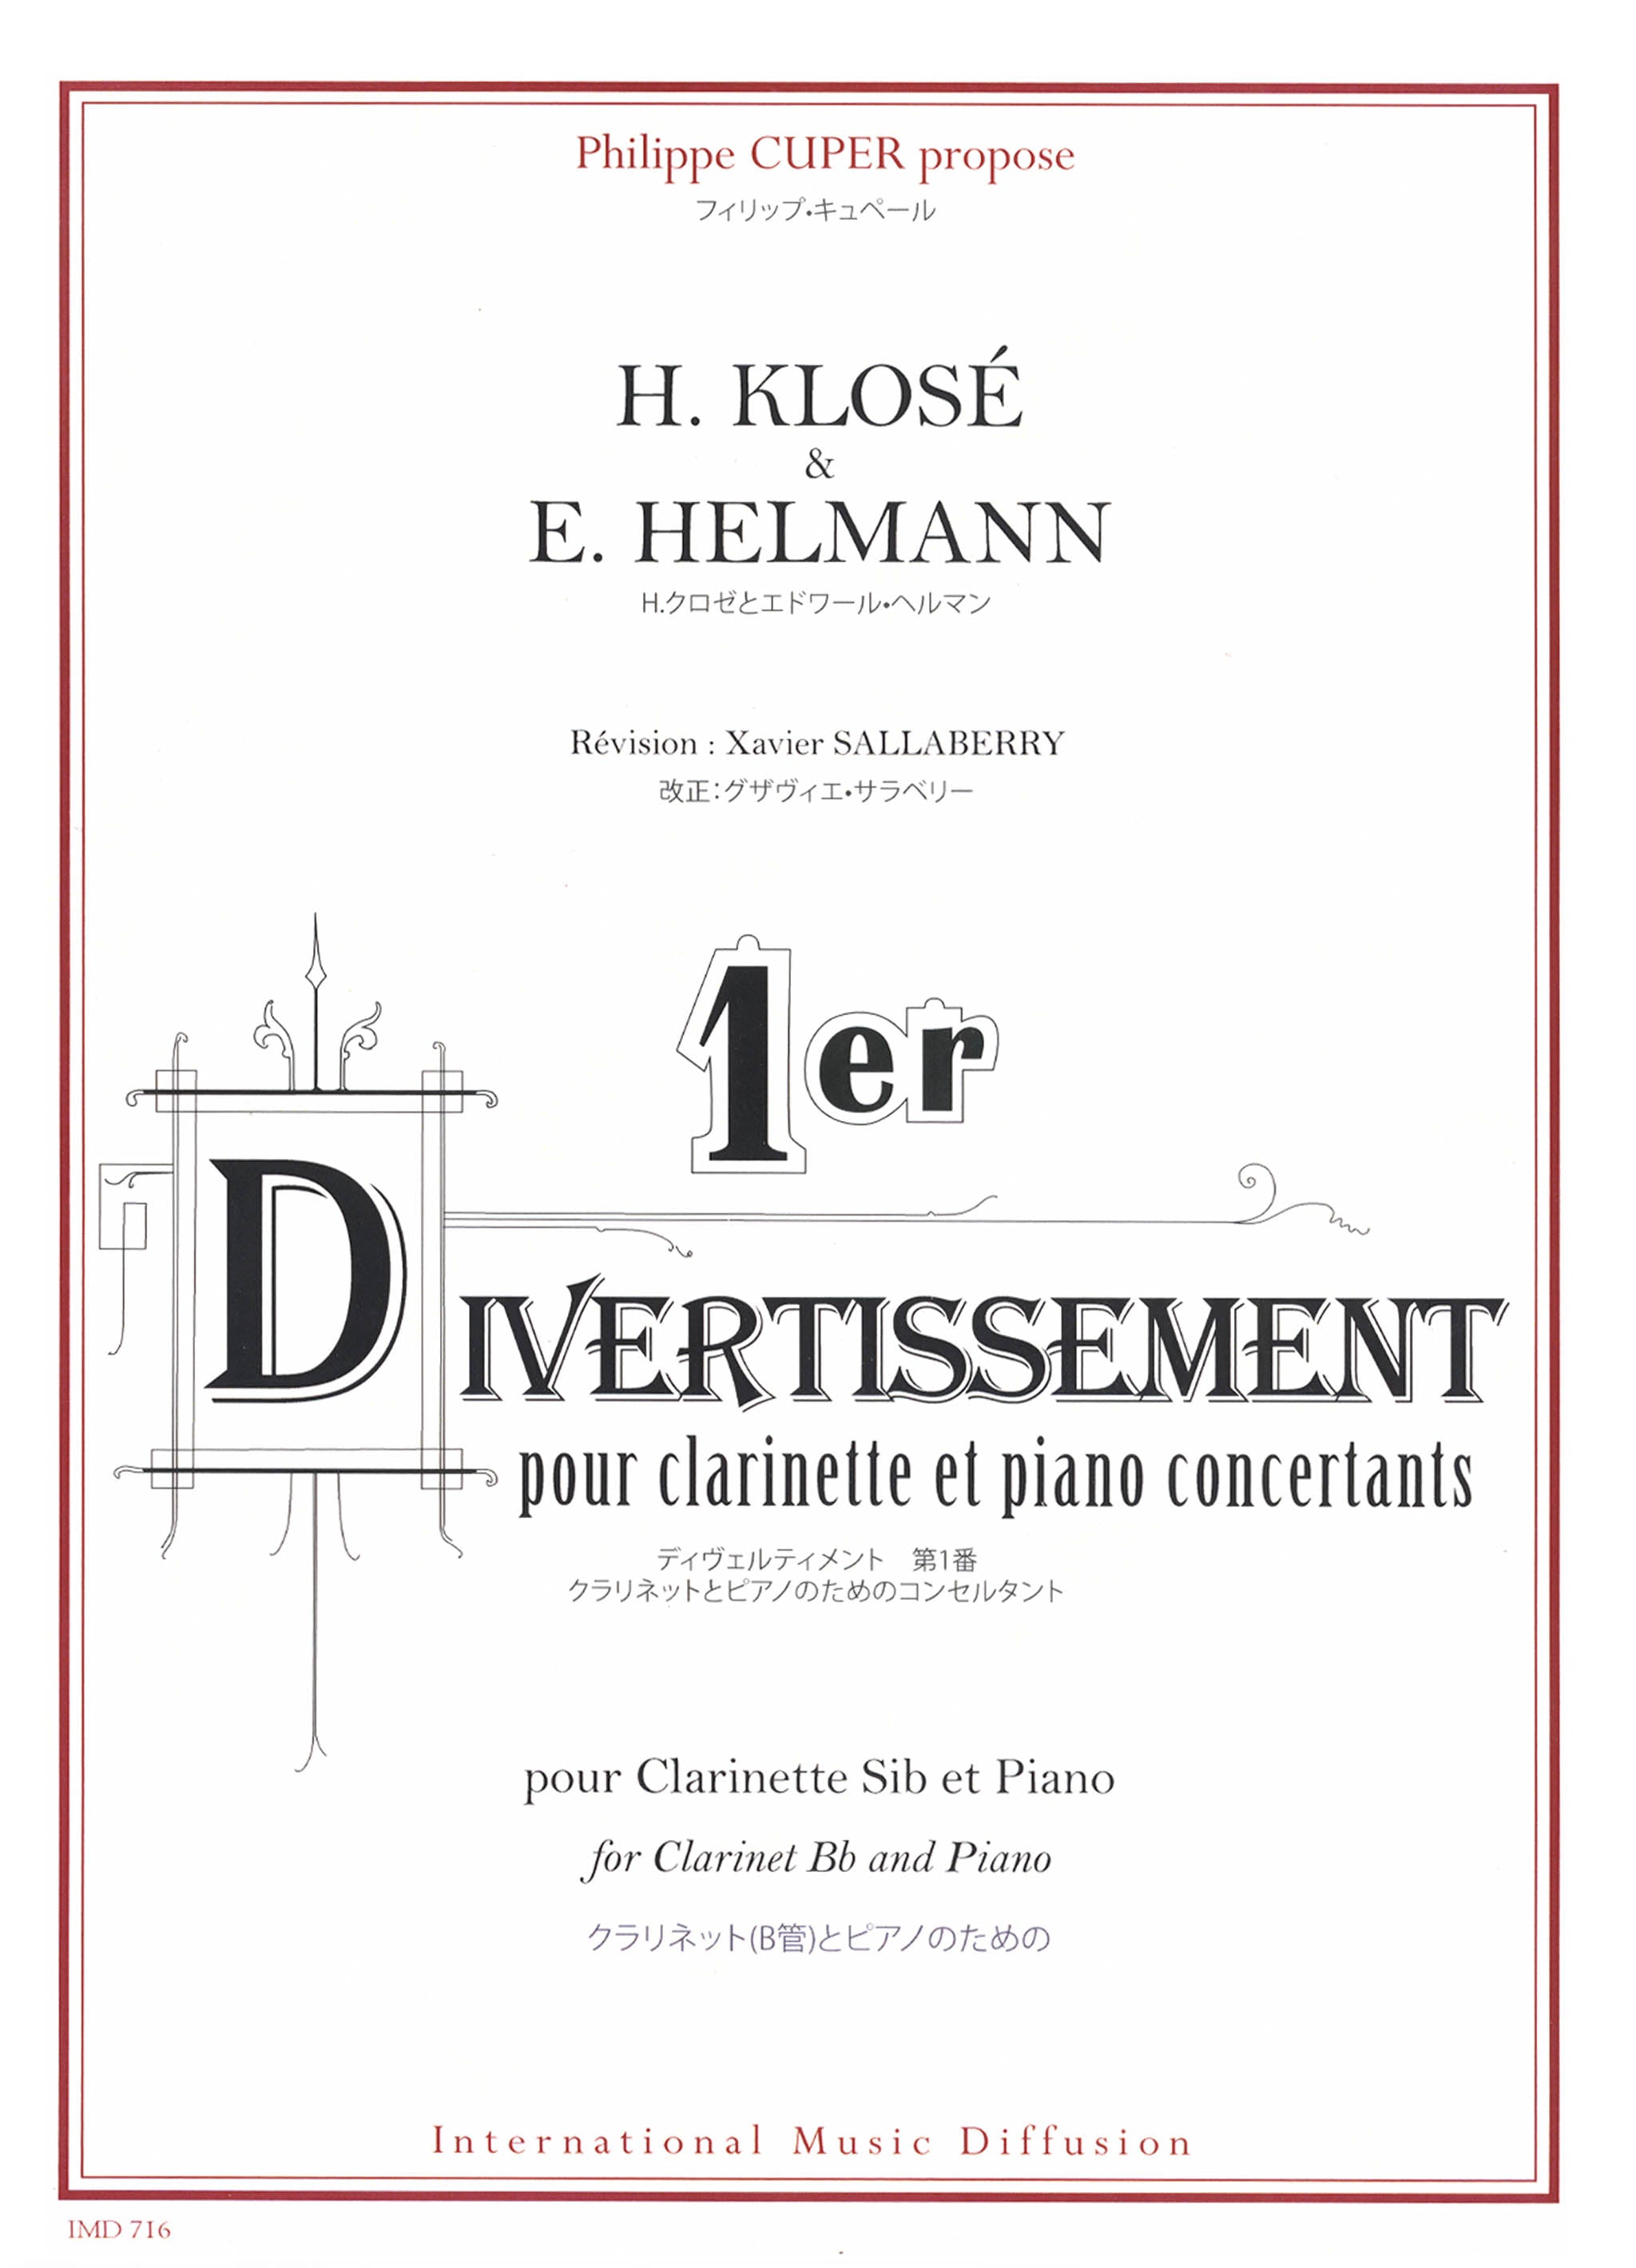 Klosé / Helmann Divertissement No. 1 clarinet and piano cover